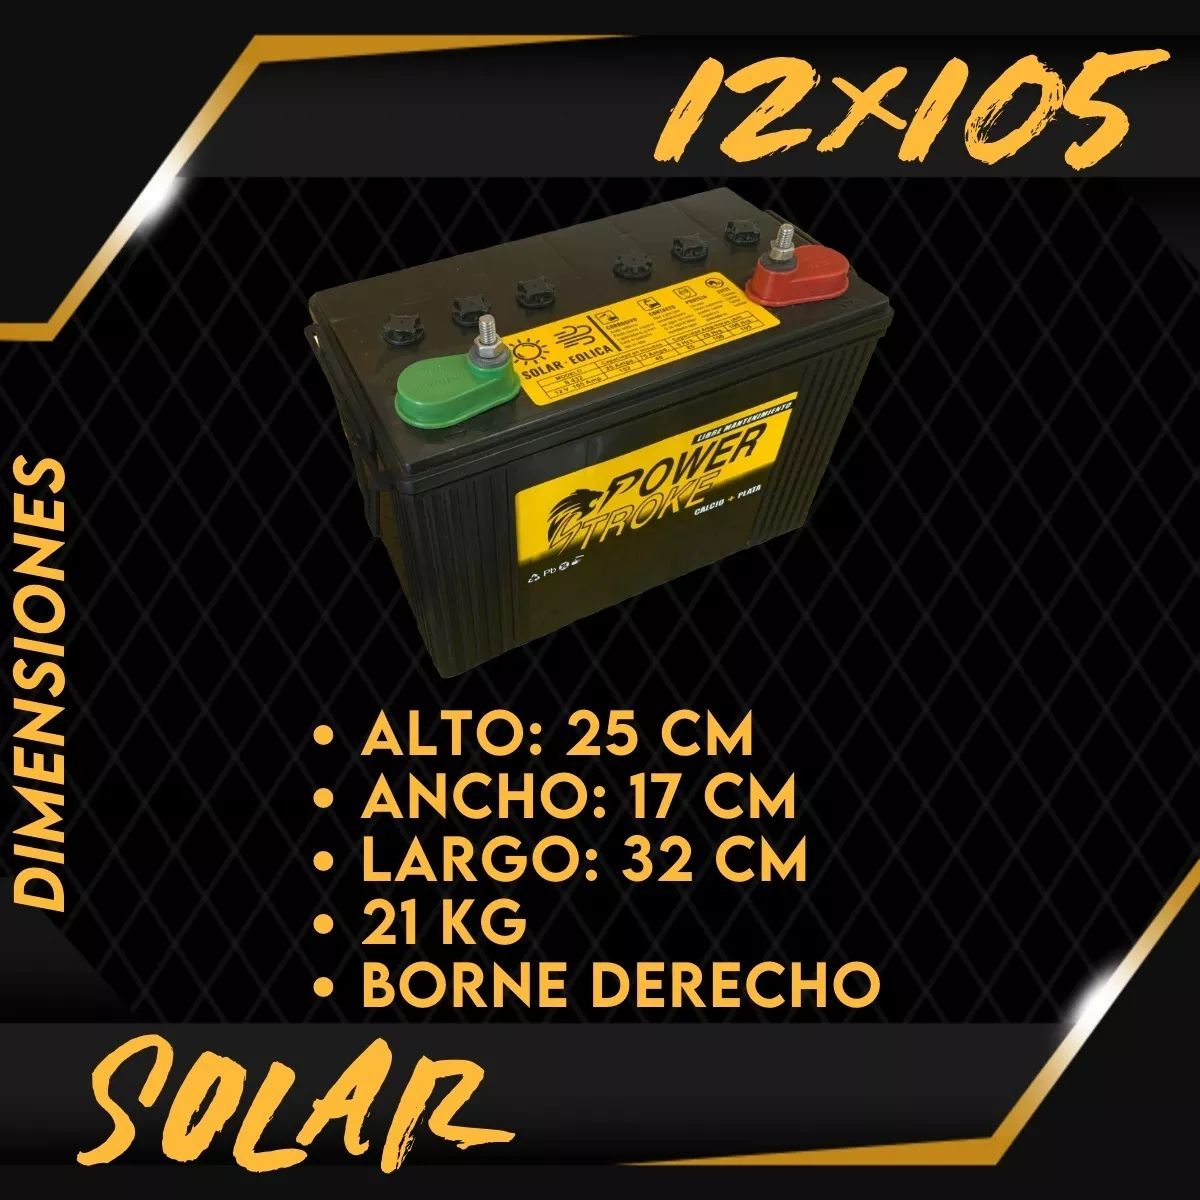 Power Stroke 12x105 Solar - Libre Mantenimiento